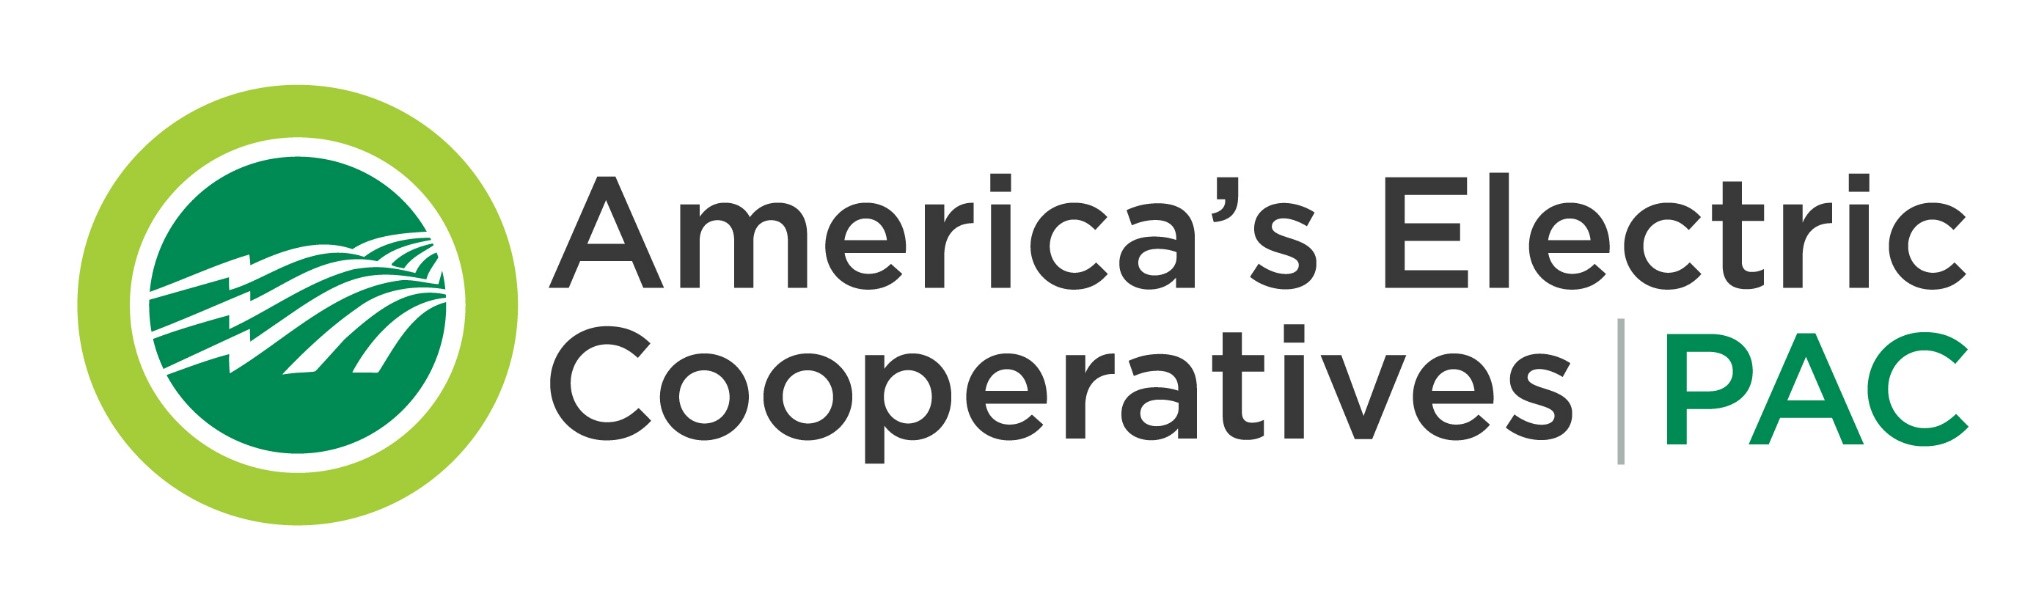 America's Electric Cooperative PAC